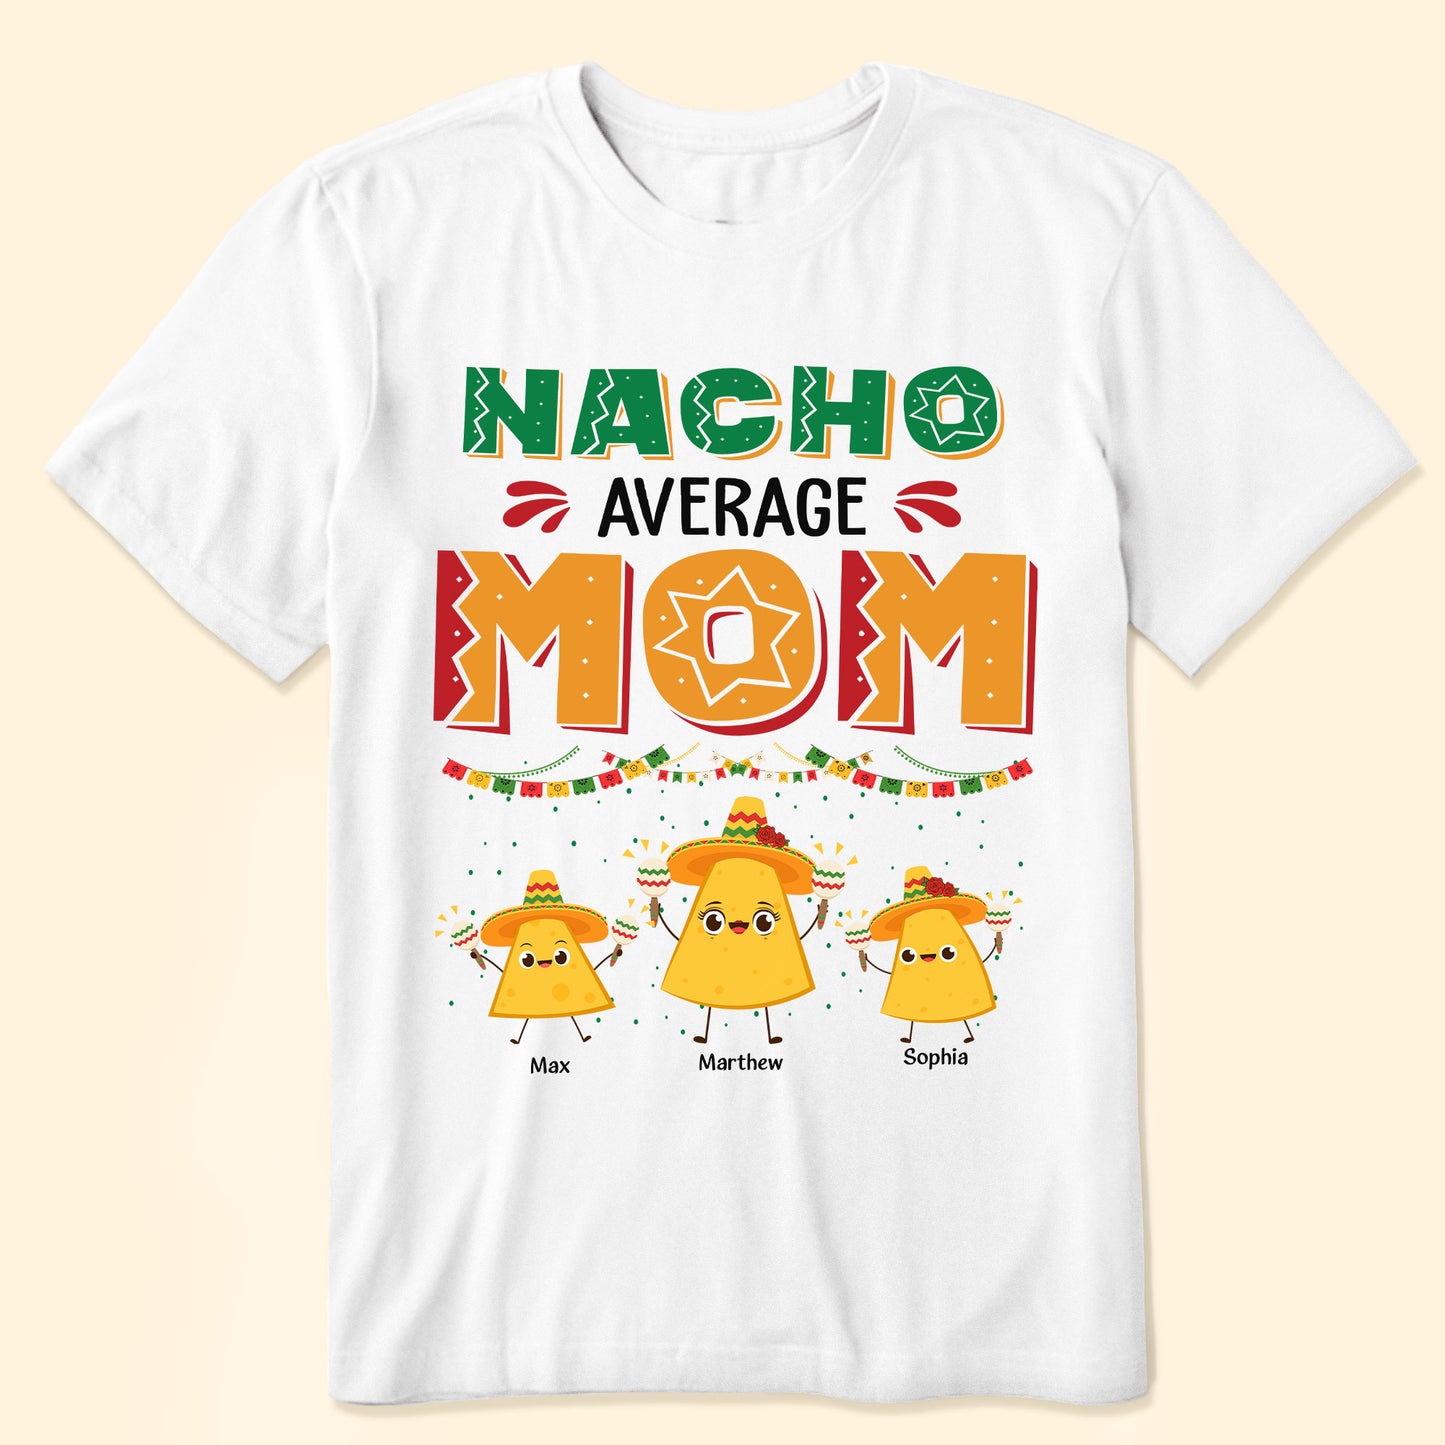 Nacho Average Dad & Mom - Personalized Shirt